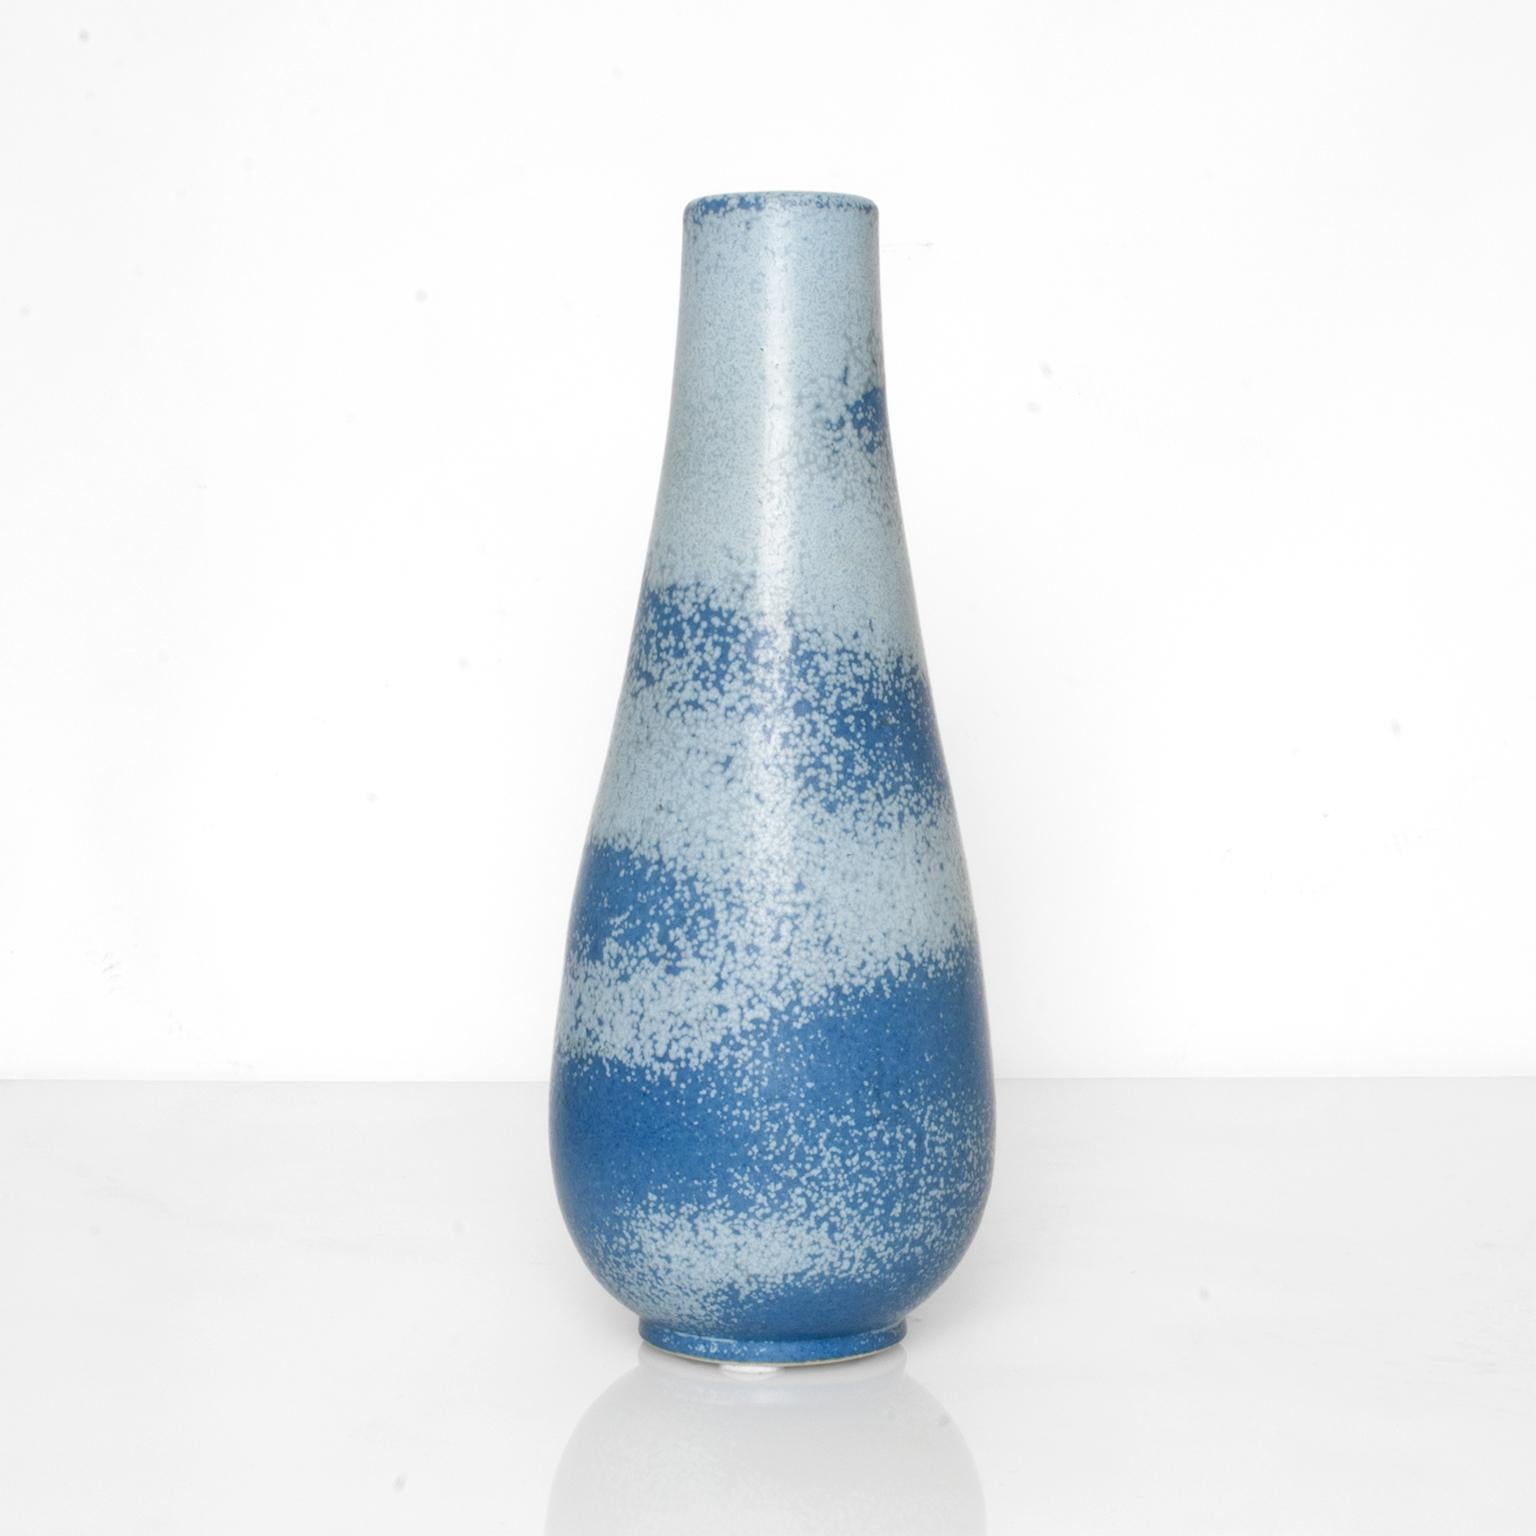 Scandinavian modern ceramic vase in light and dark blue glaze by Gunnar Nylund for Rorstrand, Sweden, circa 1949-1955.